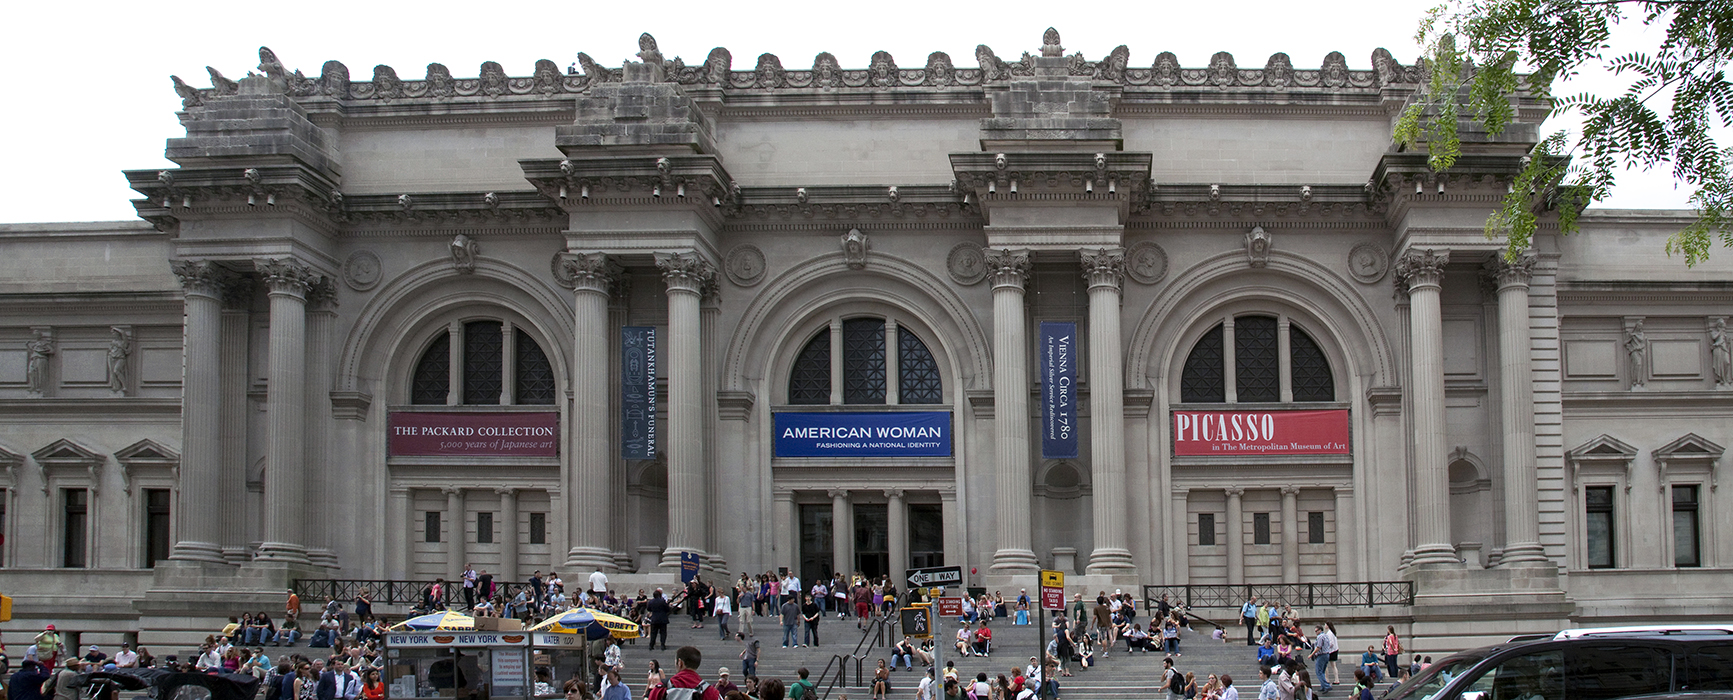 The Metropolitan Museum of Art (photo: Tony Hisgett, CC BY 2.0)